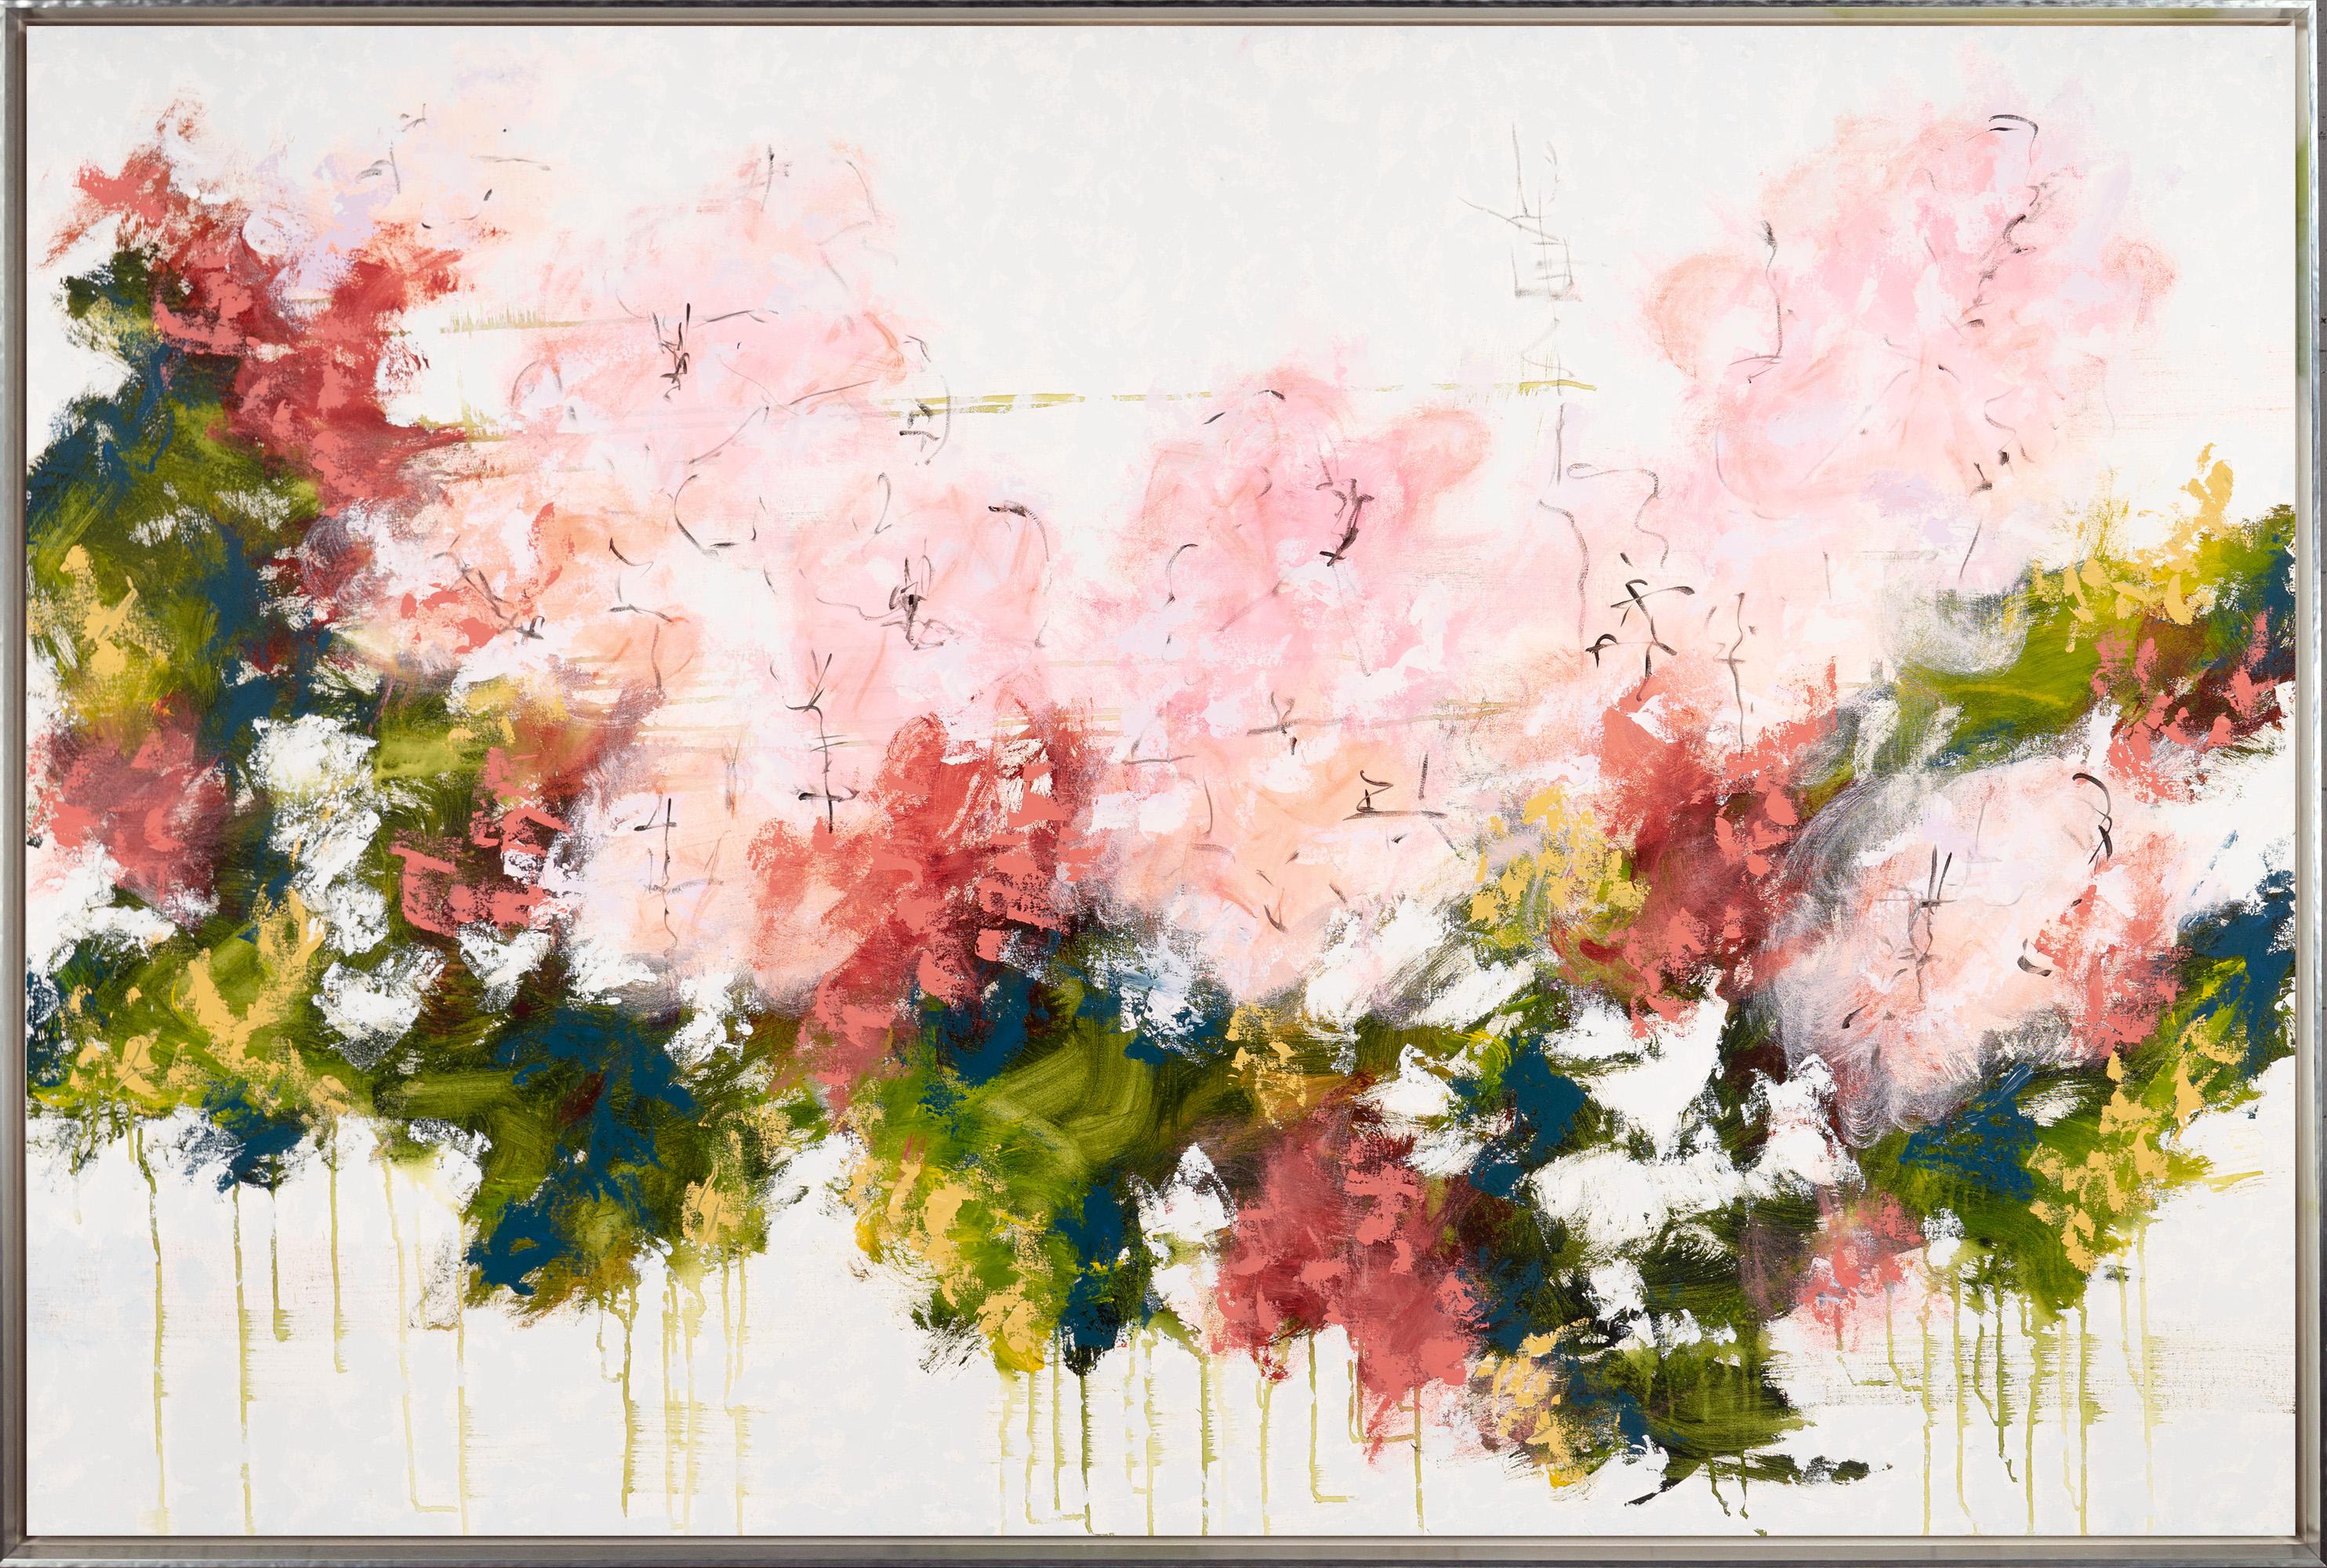 "Botanica 15-2" Floral abstrait contemporain Encadré Mixed Media sur toile - Mixed Media Art de David Skillicorn